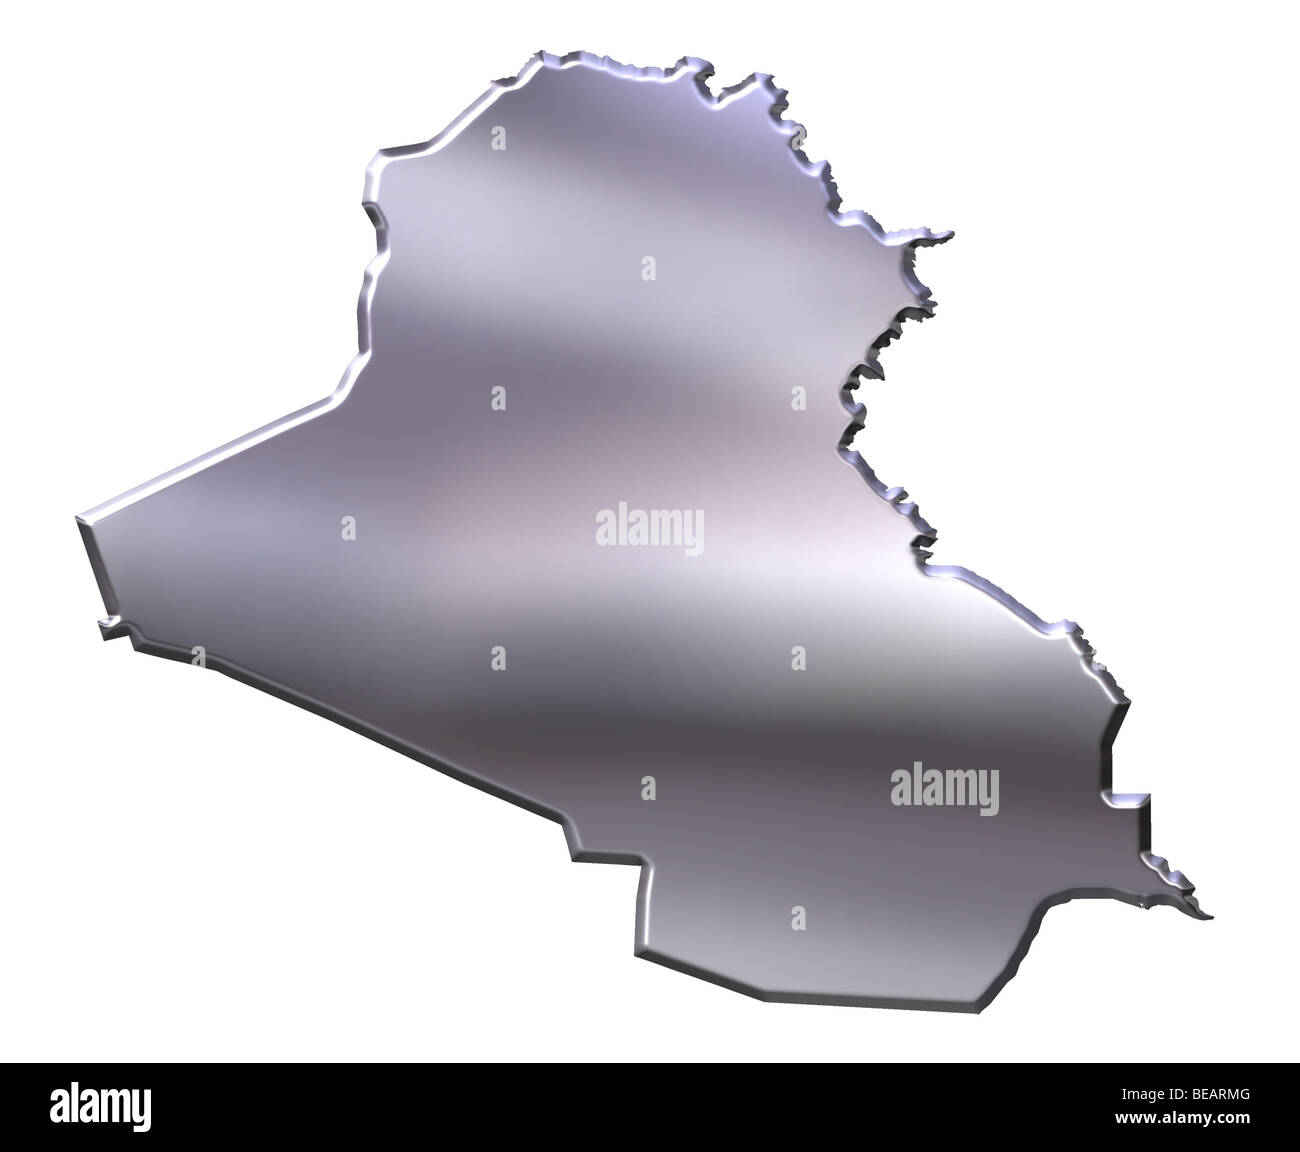 Iraq 3d silver map Stock Photo